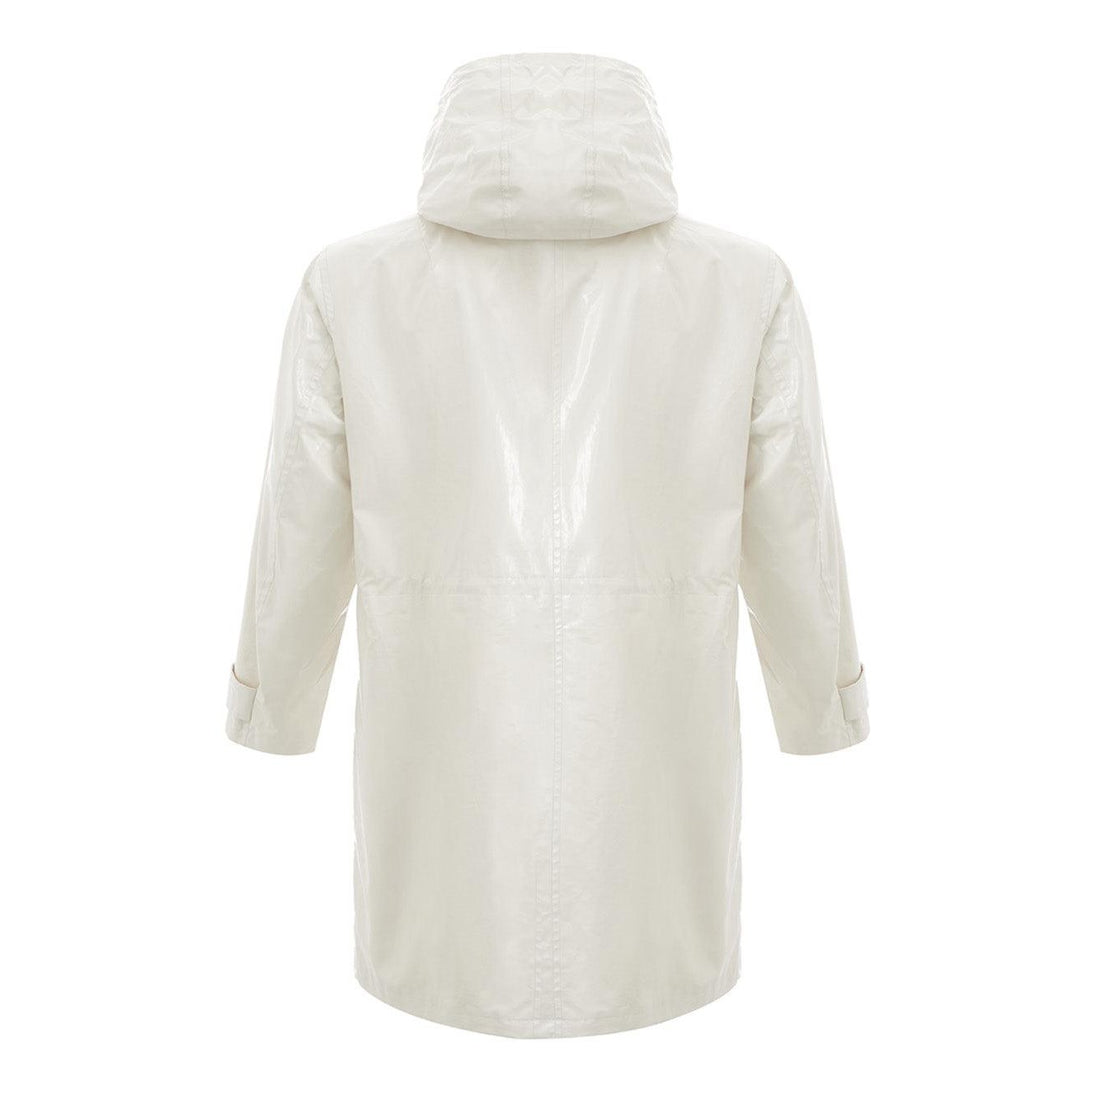 Sealup Chic White Couture Raincoat